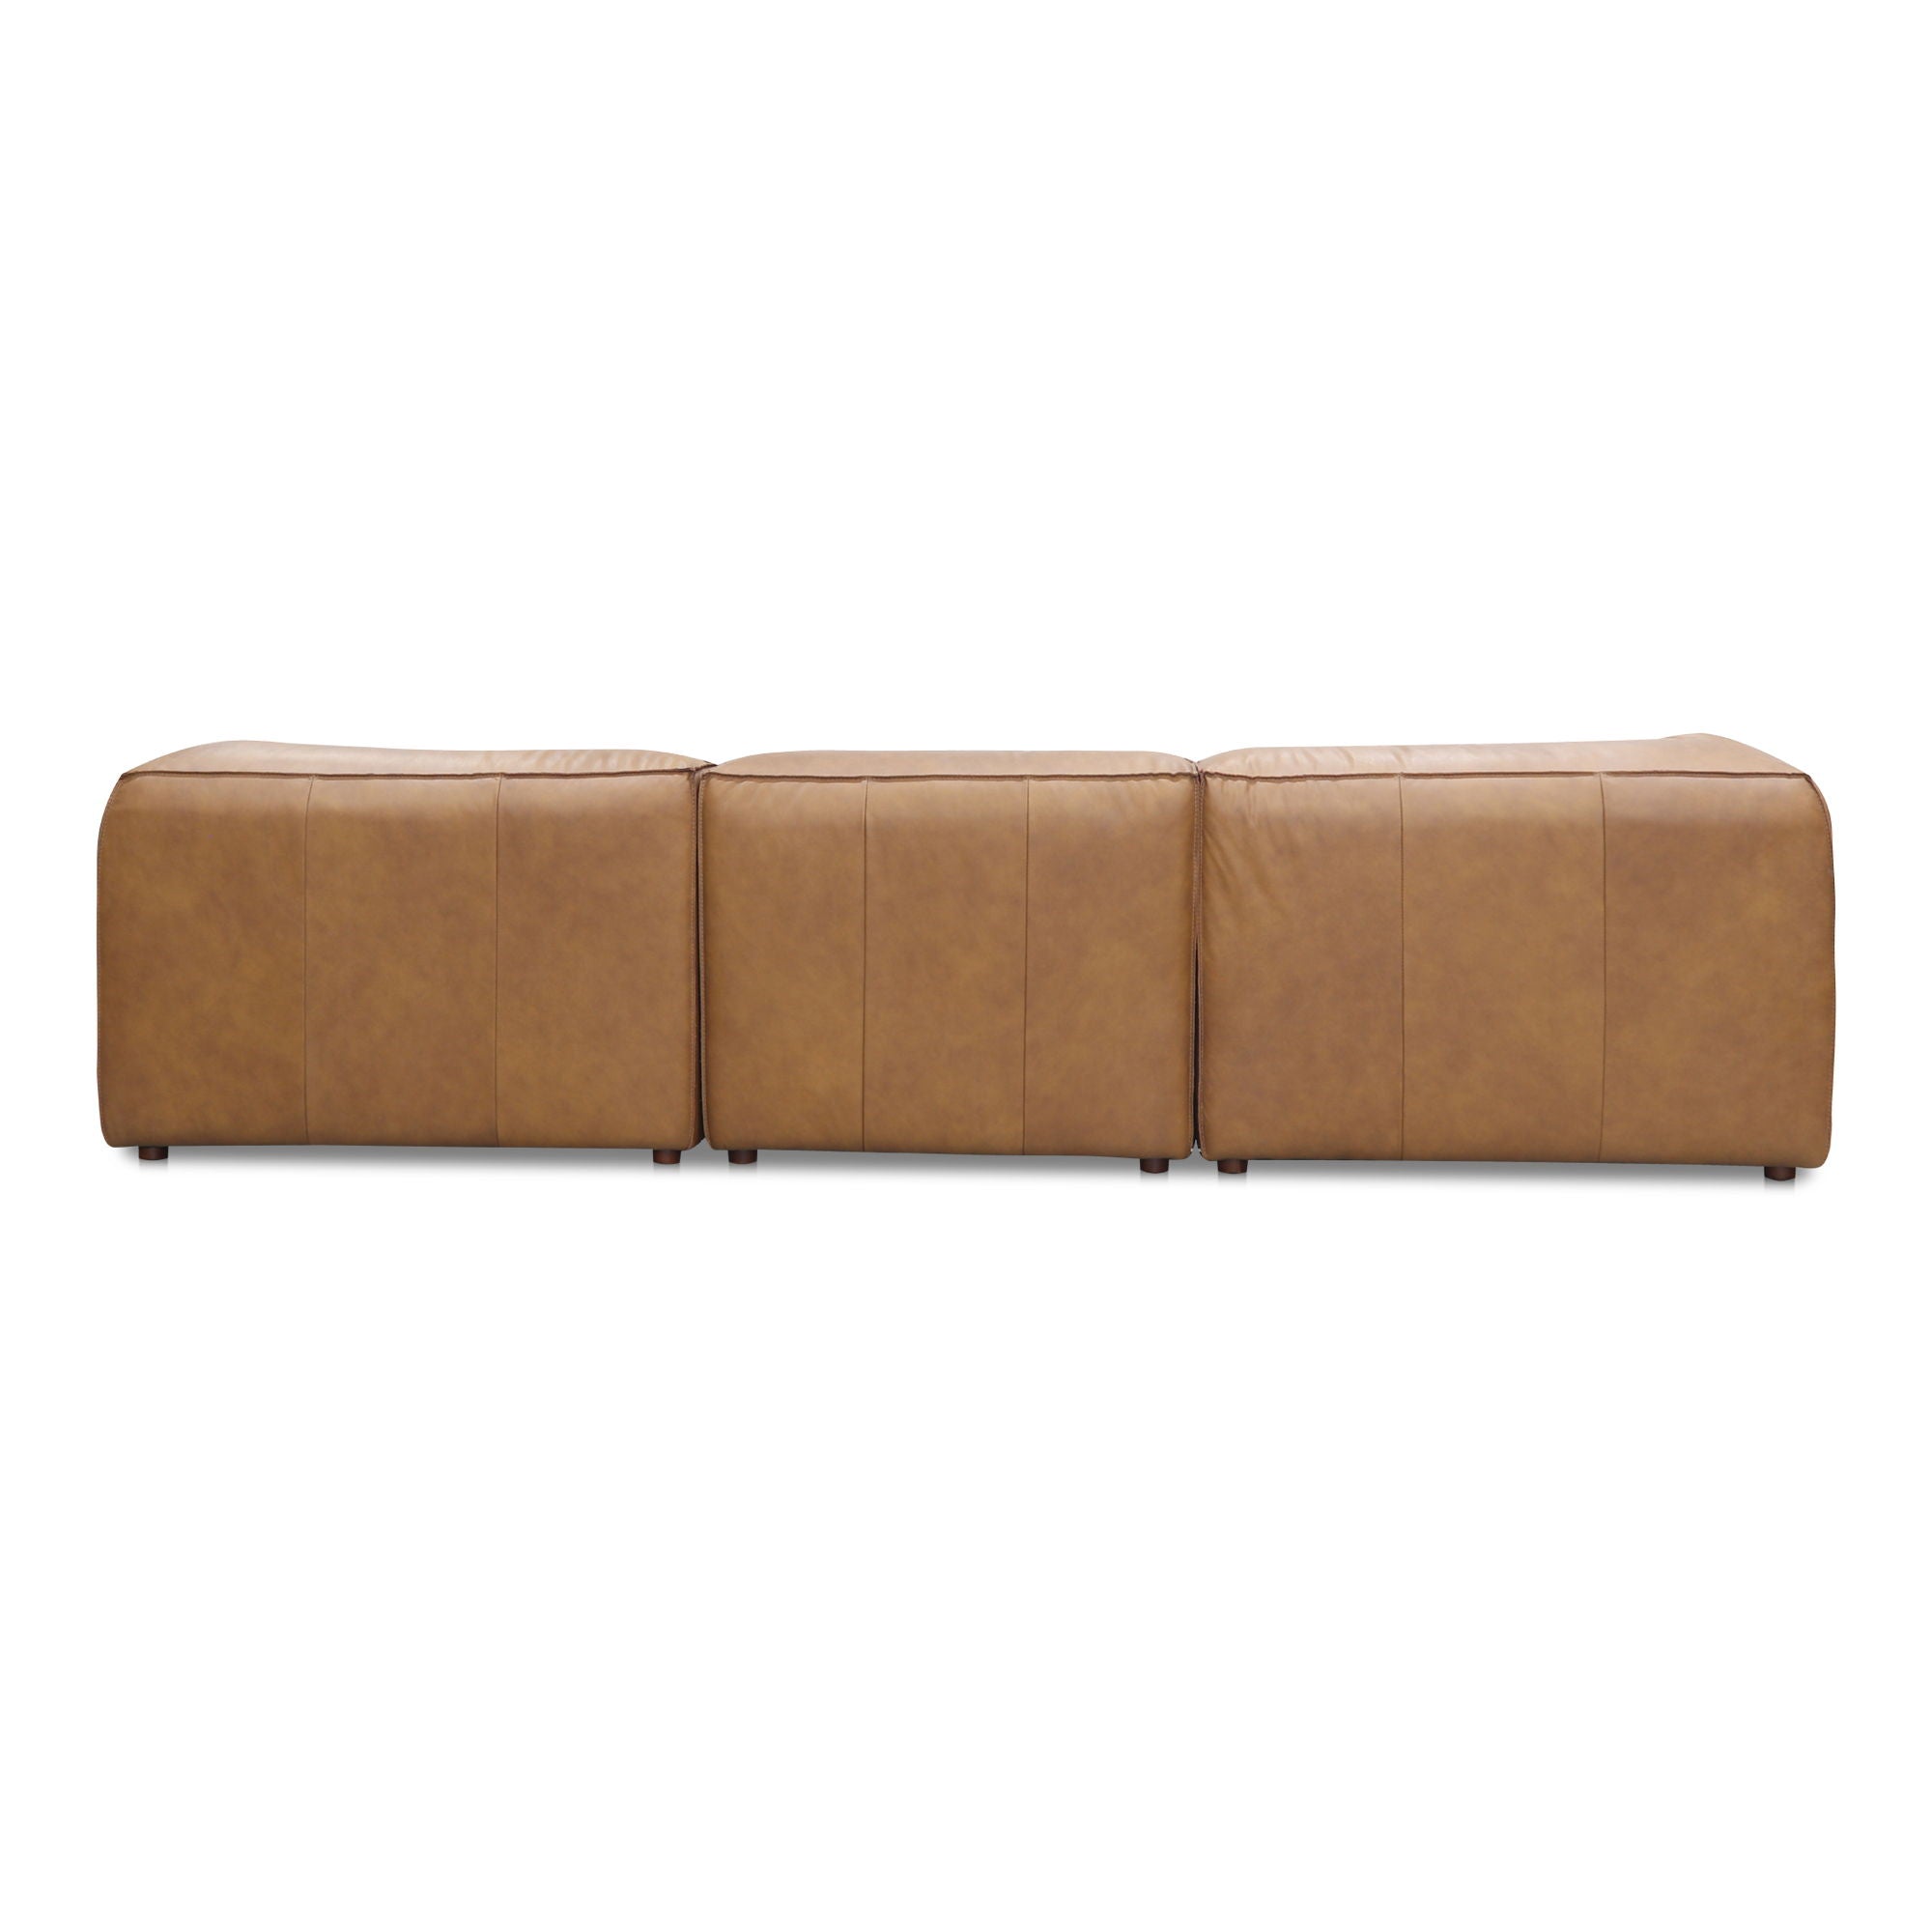 Tan Leather Modular Sectional - Form Signature, Comfy